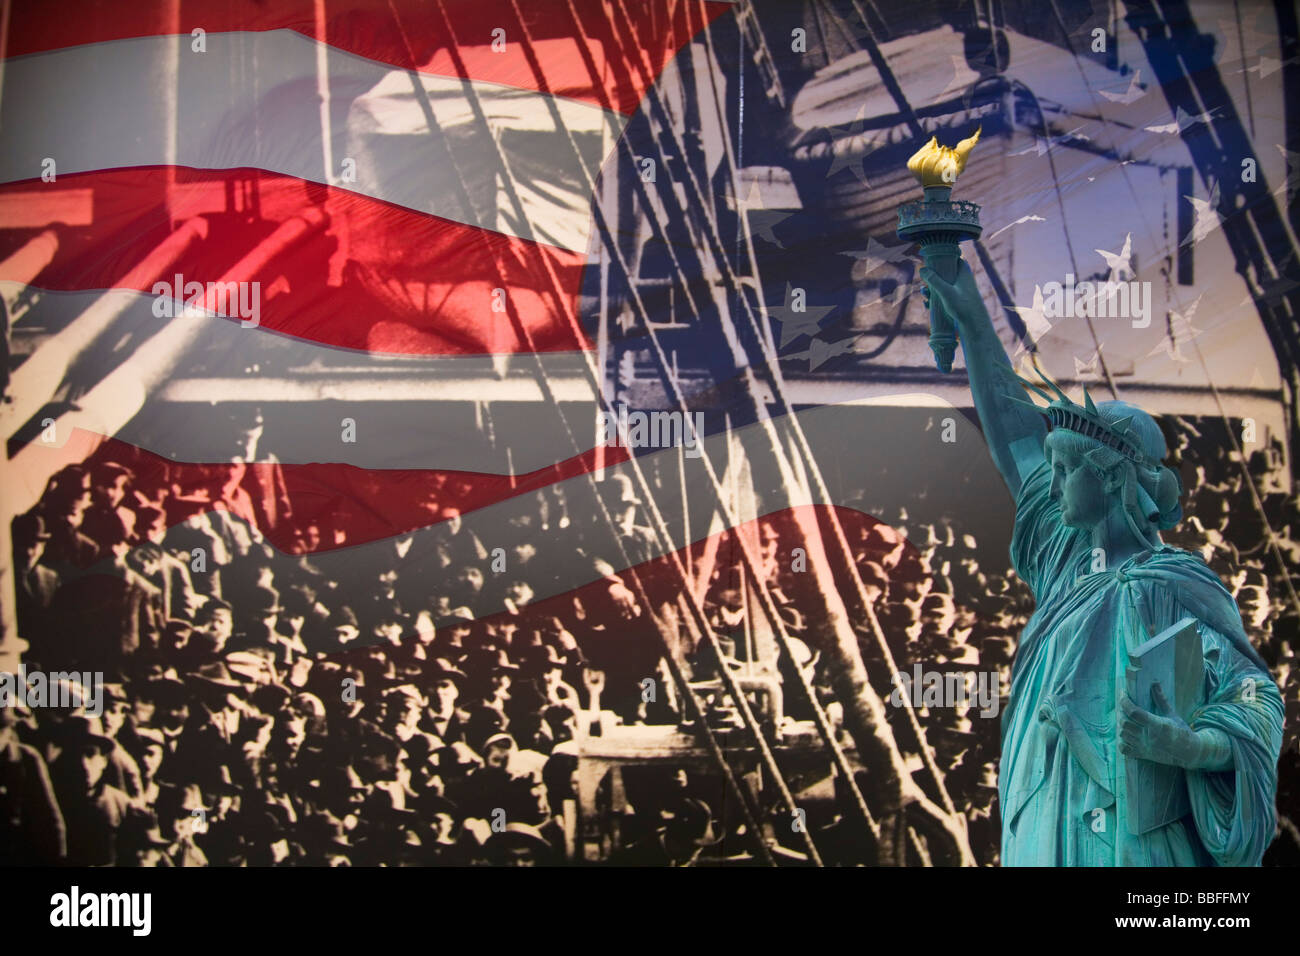 Freiheitsstatue Liberty Einwanderung Einwanderer Komposit Lady Liberty begrüßt Einwanderer aus Europa nach New York Harbor Hafen NY Stockfoto